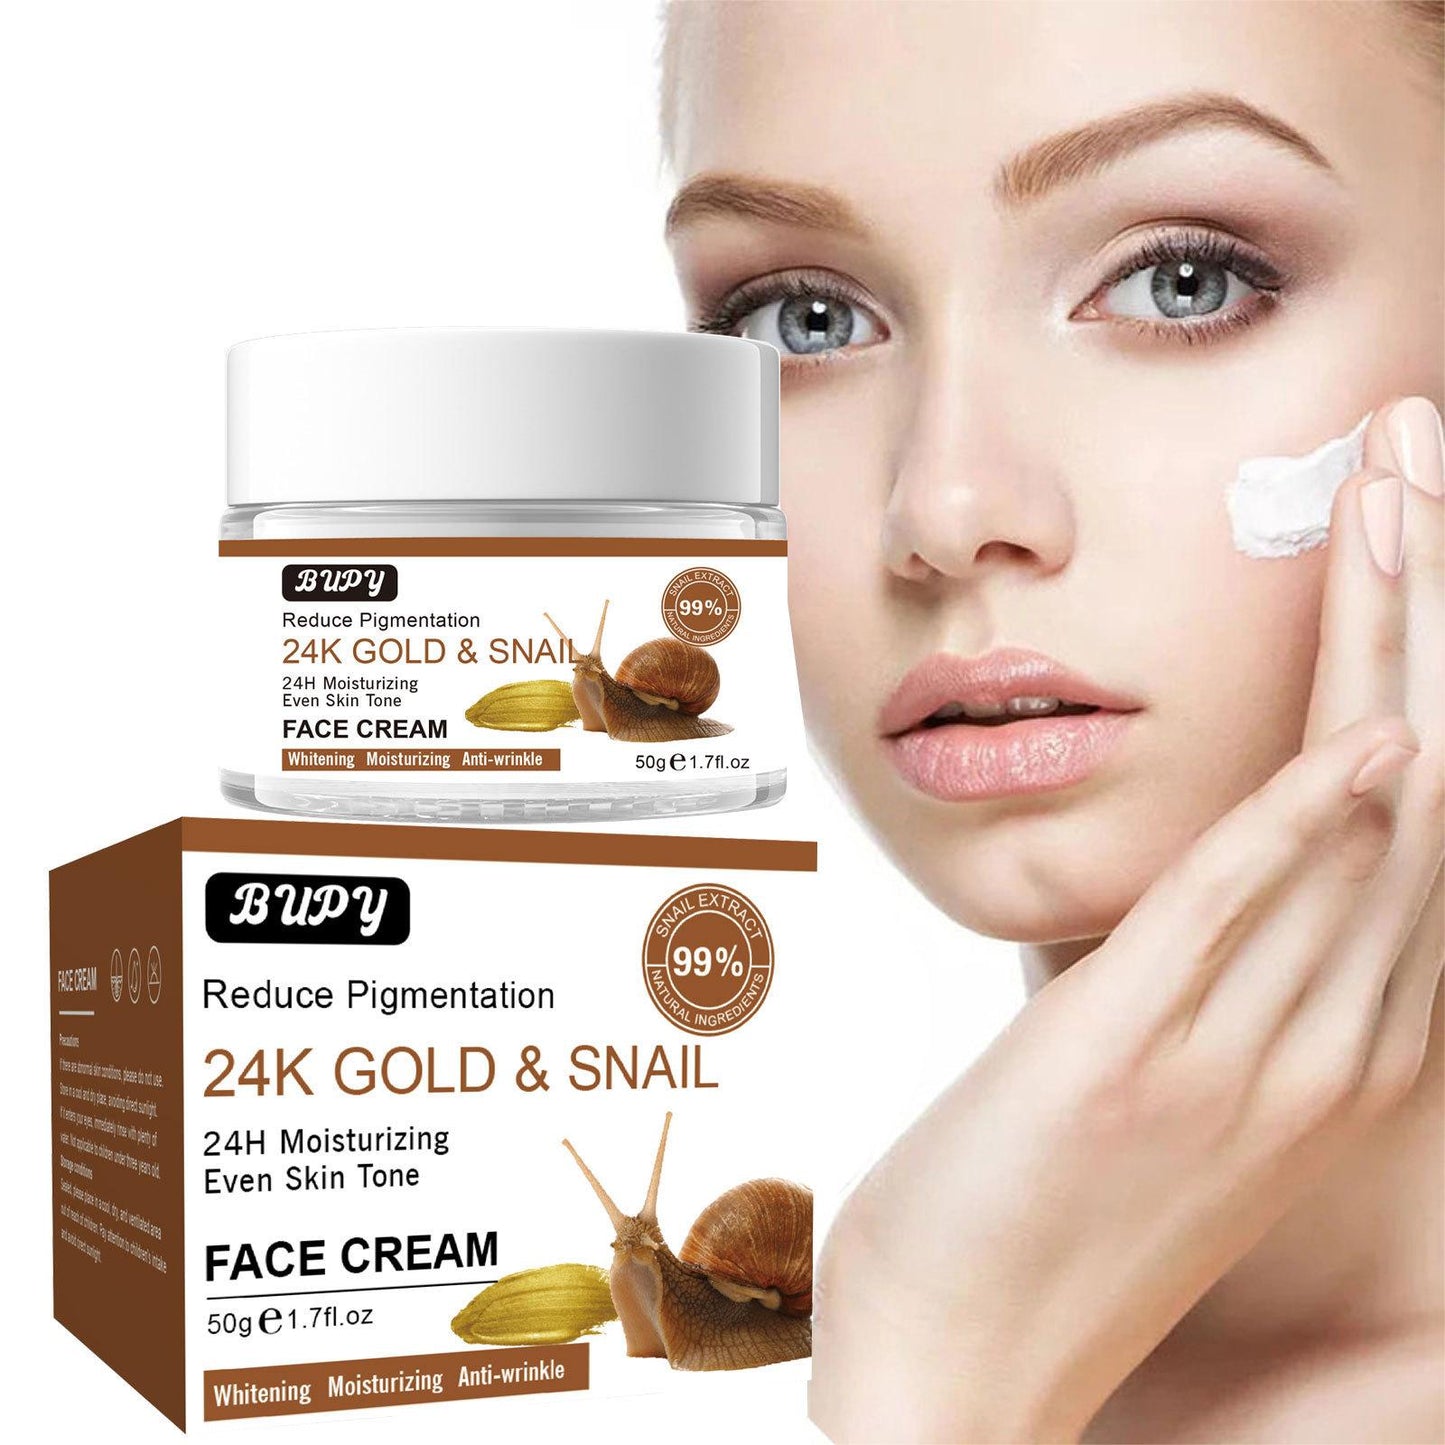 Wholesale Customized Golden Snail Face Cream, UV Resistant, Refreshing, Moisturizing Essence Cream Supplier 318